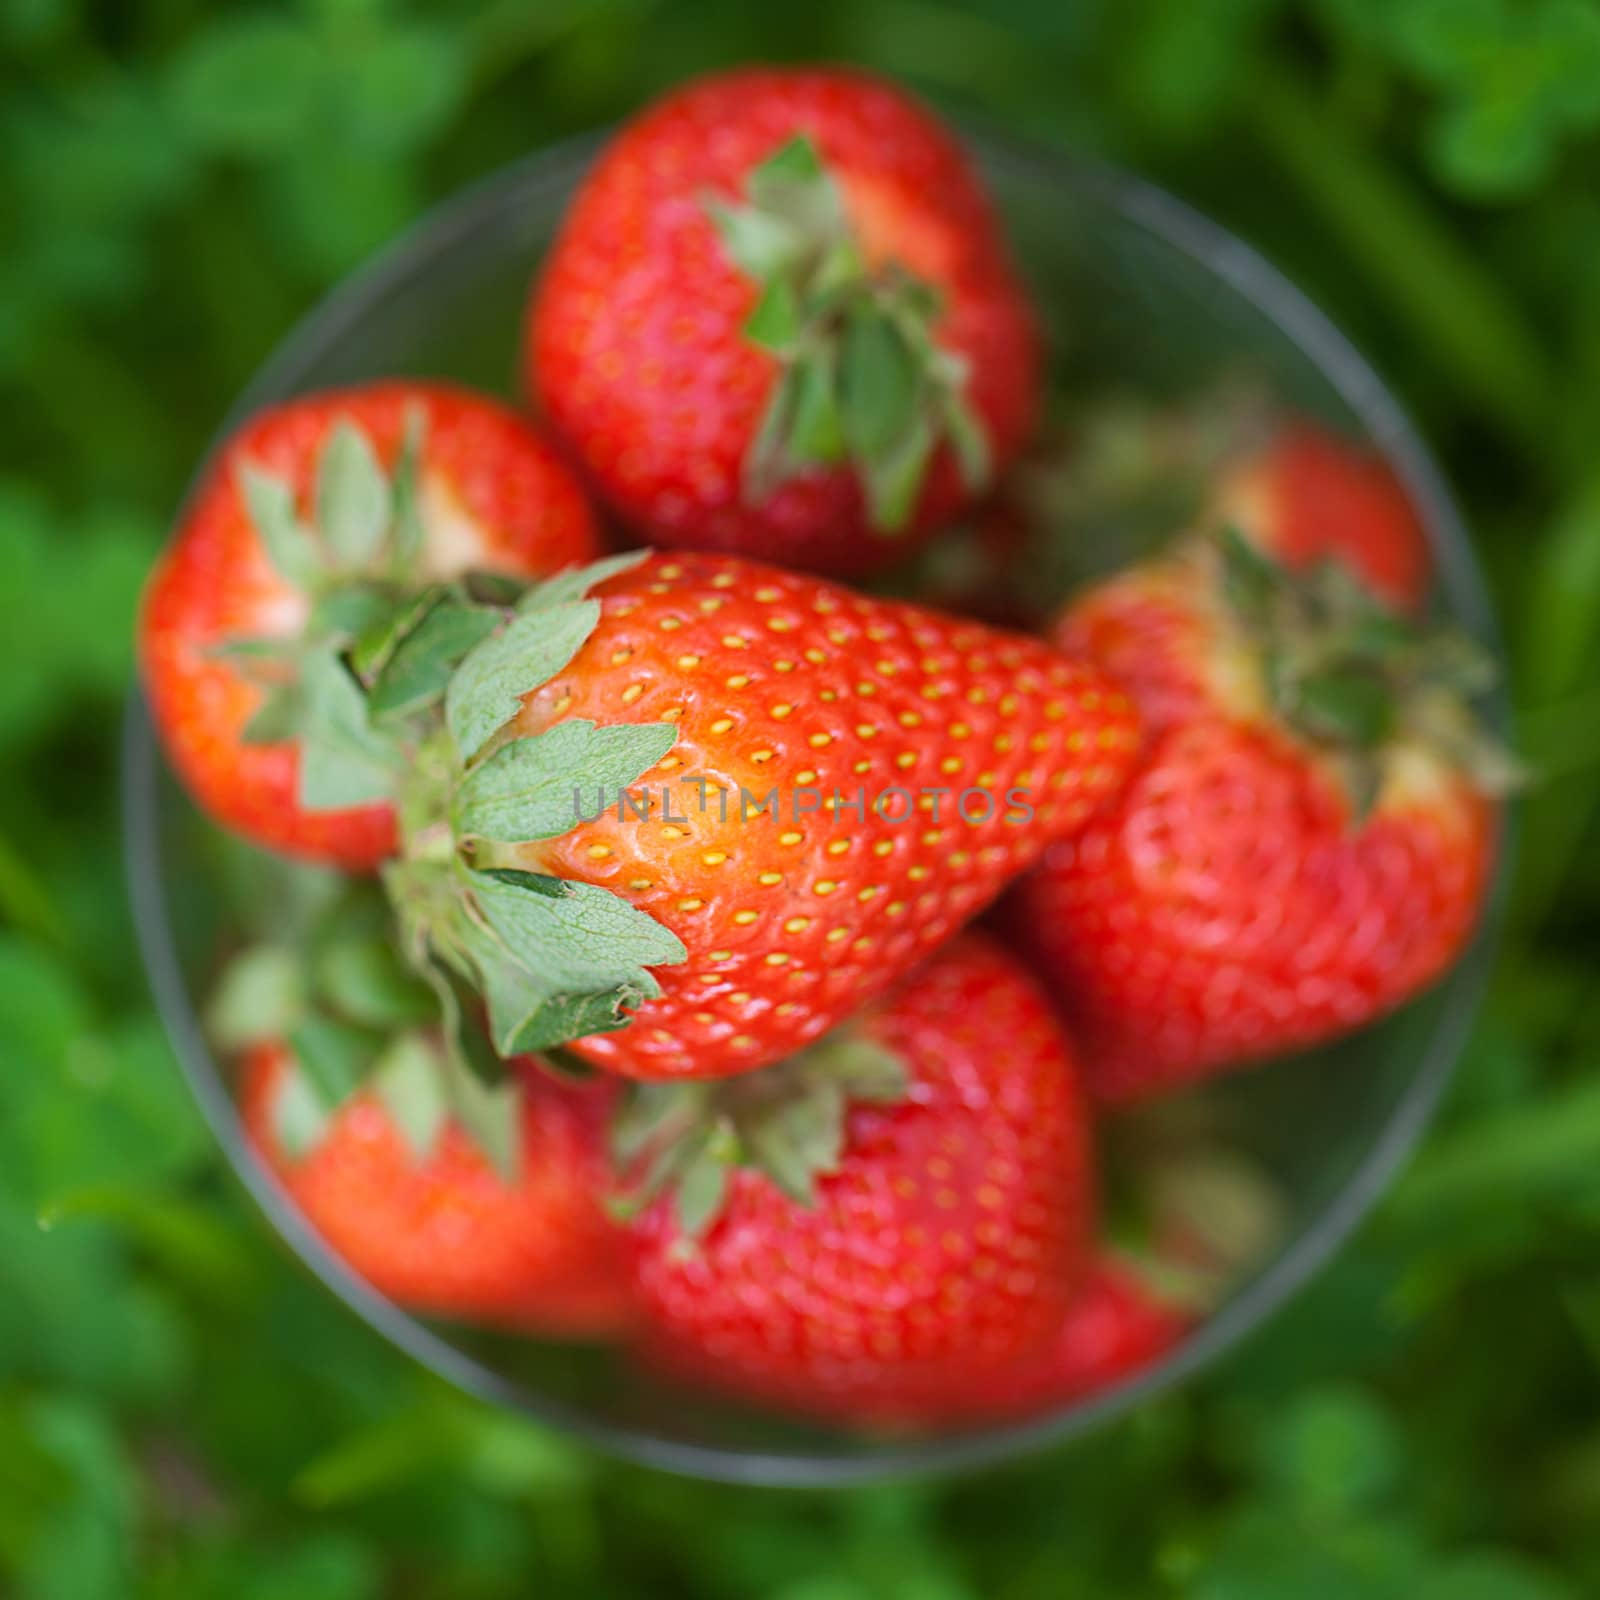 strawberries lying on green grass